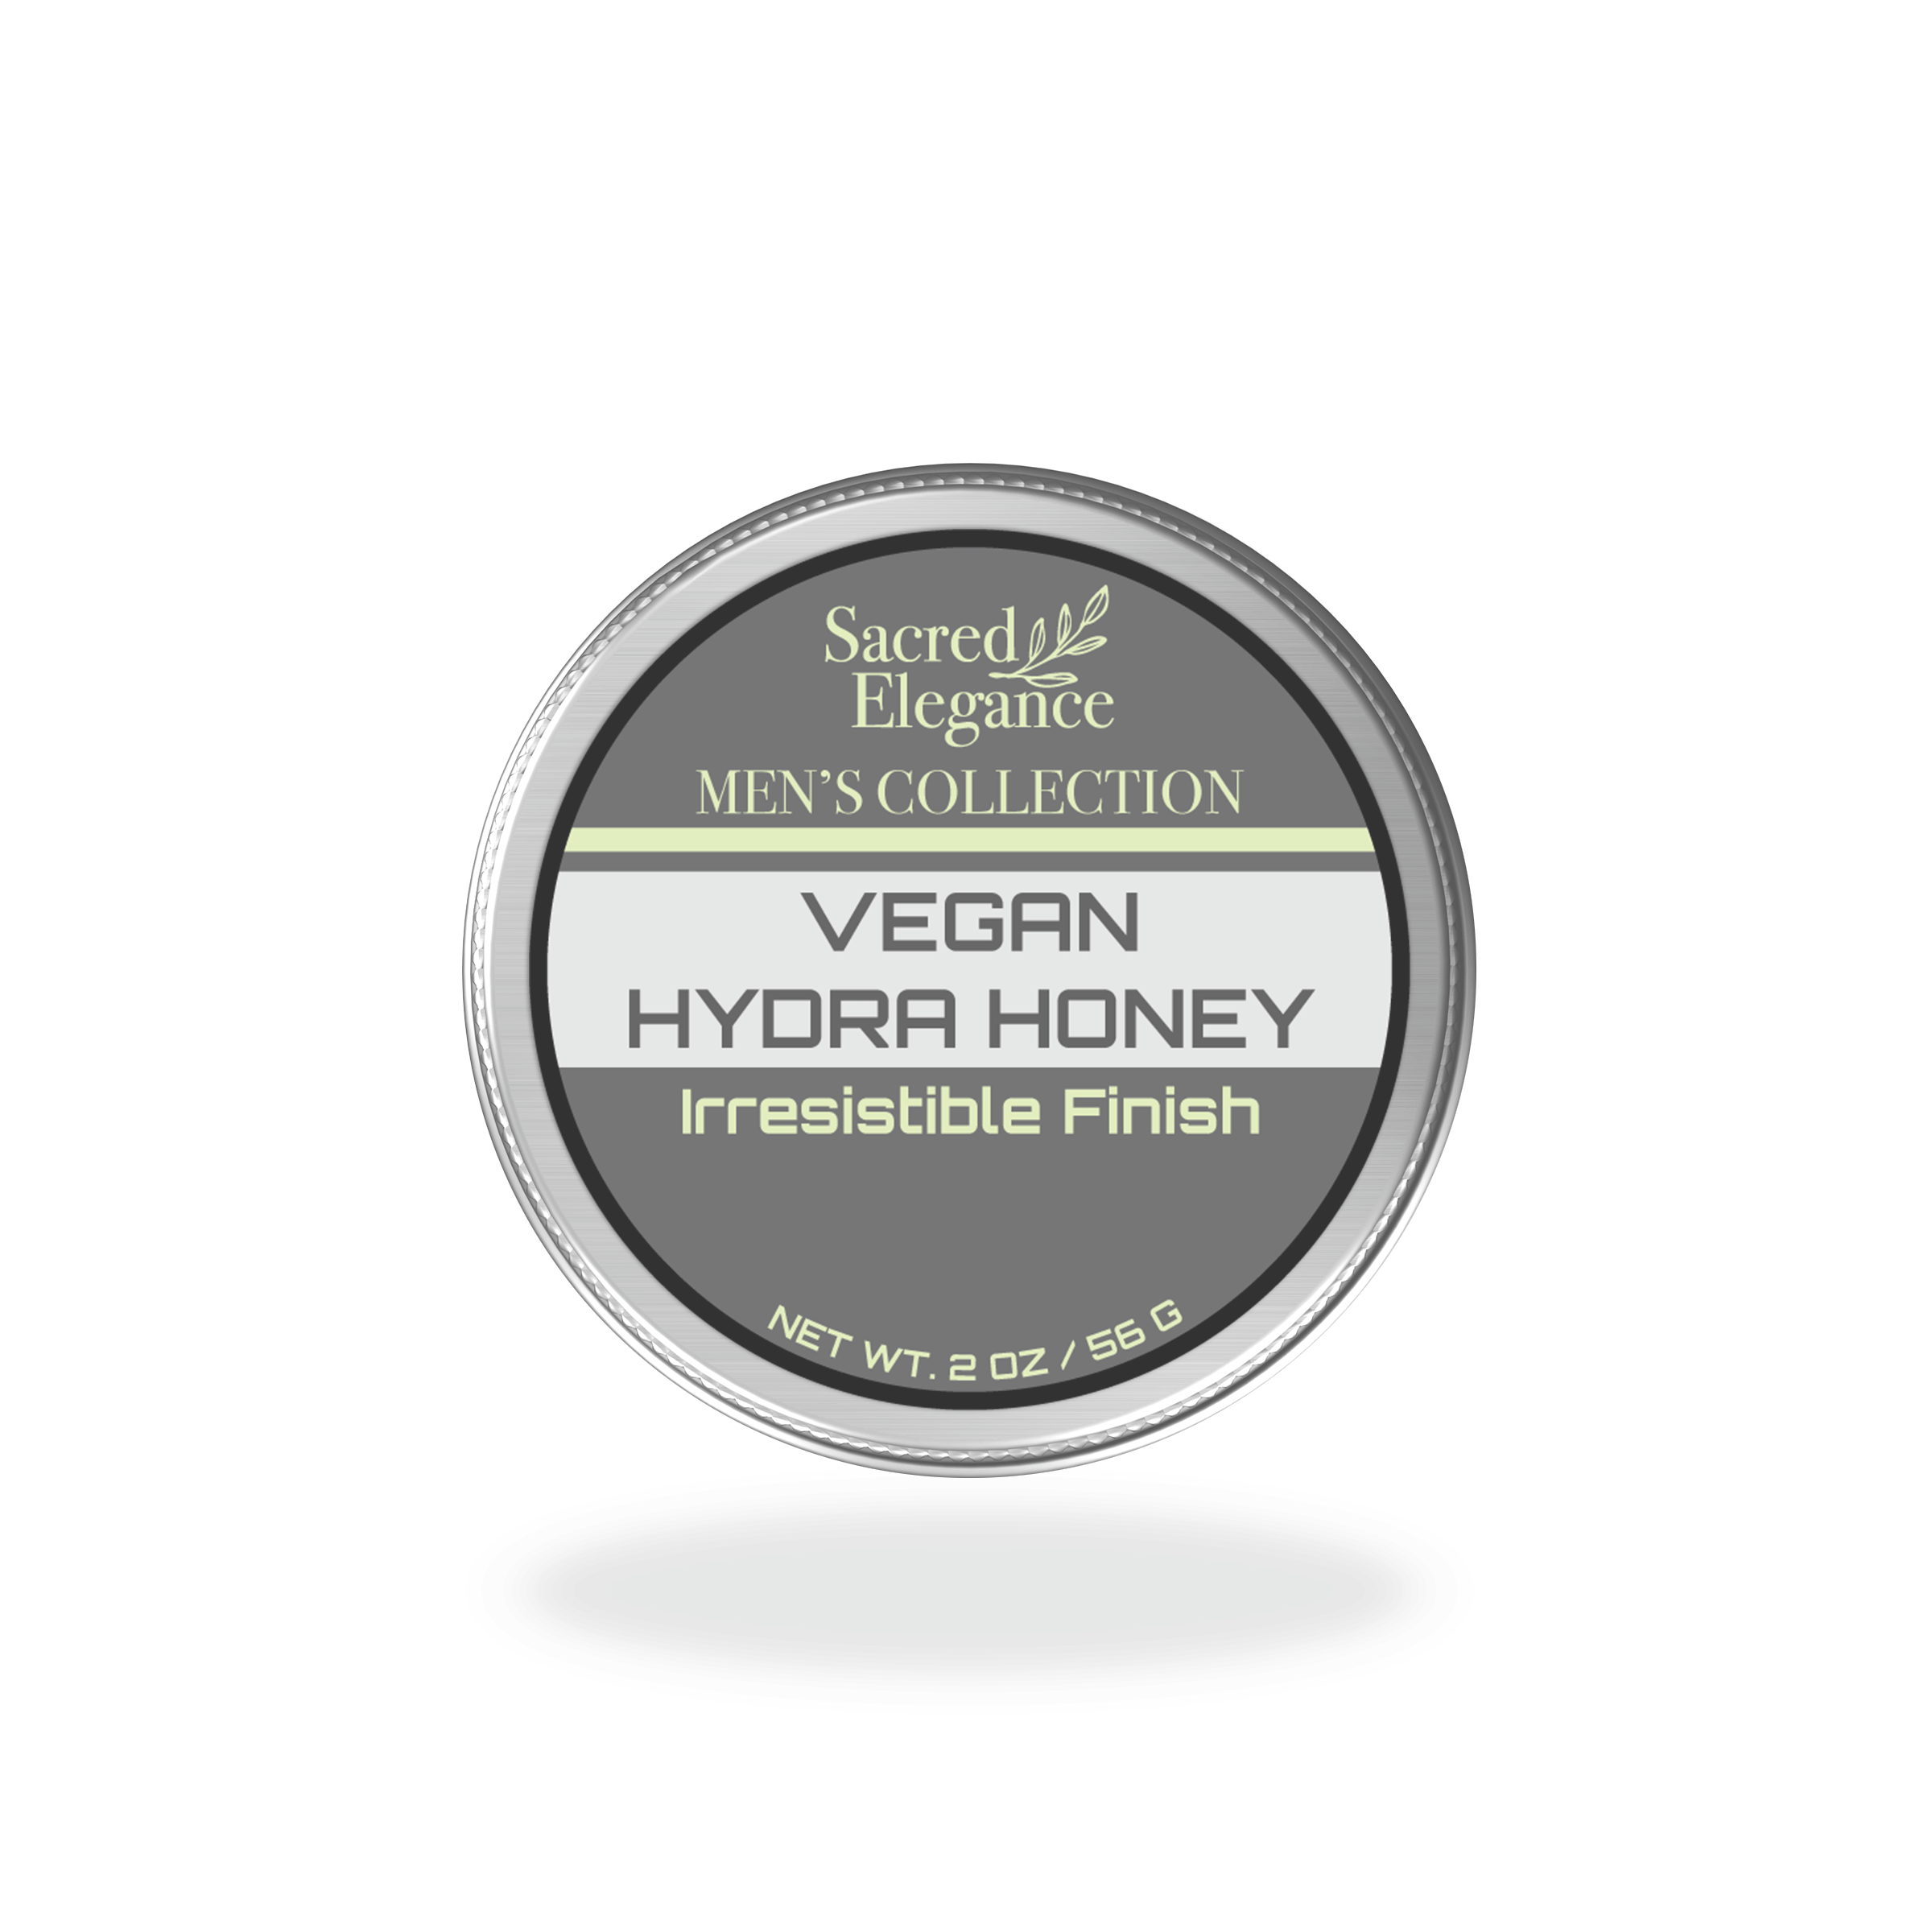 Irresistible Finish Vegan Hydra Honey